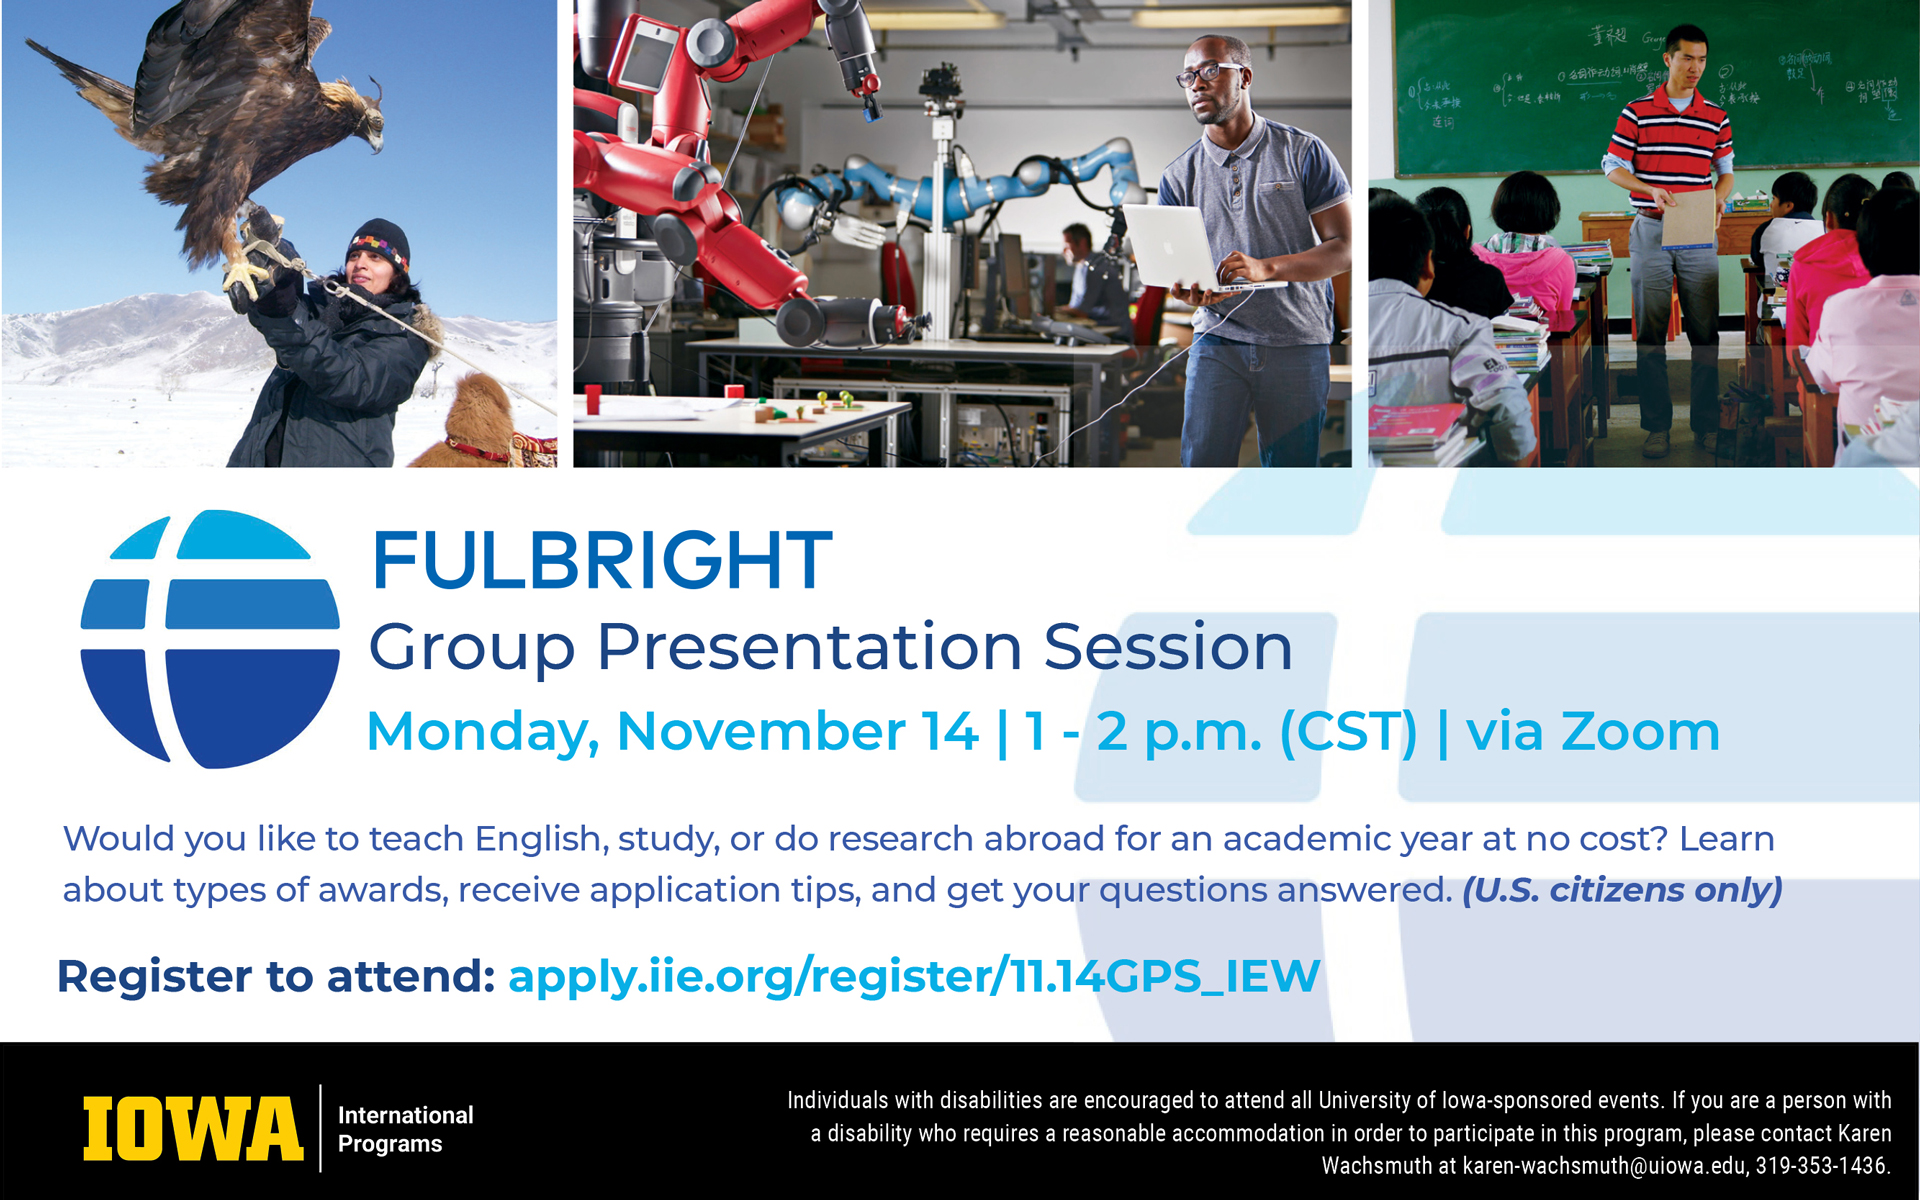 Fulbright Group Presentation Session, Monday, November 14 1-2pm